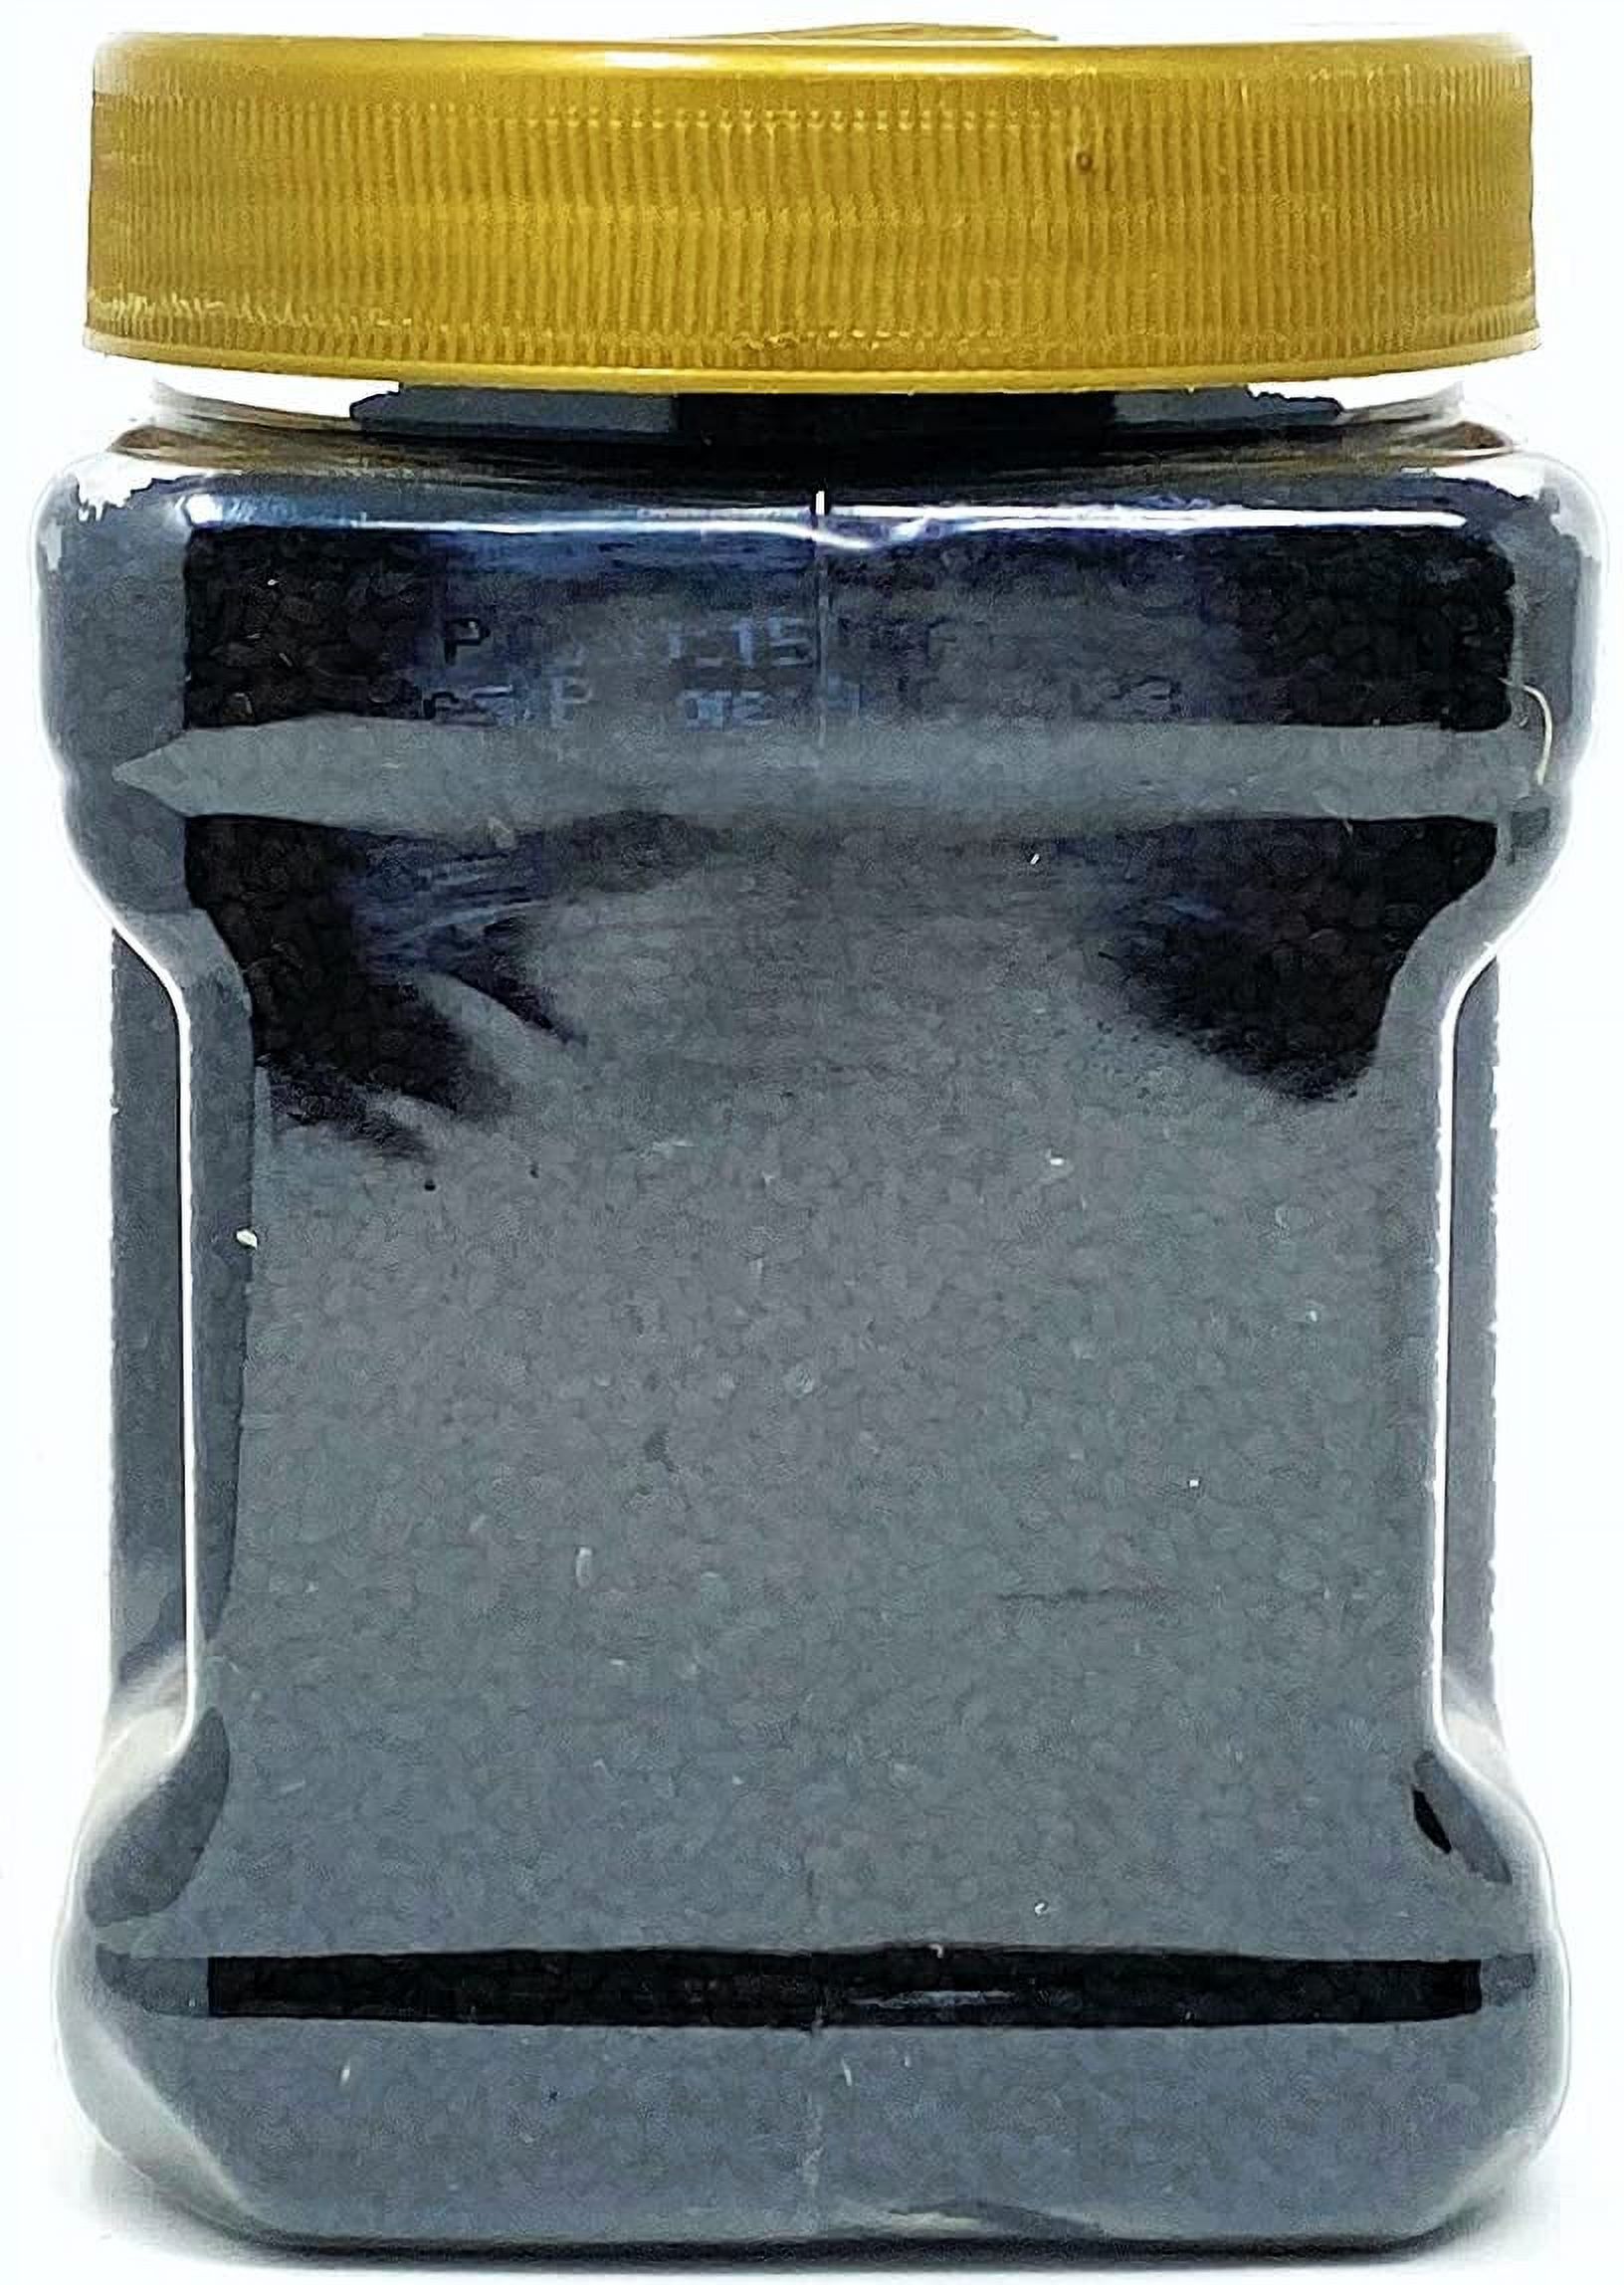 Rani Kalonji Seeds Whole (Black Seed, Nigella Sativa, Black Cumin) Spice 16oz (454g) PET Jar, All Natural ~ Gluten Friendly | NON-GMO | Vegan | Indian Origin - image 4 of 4